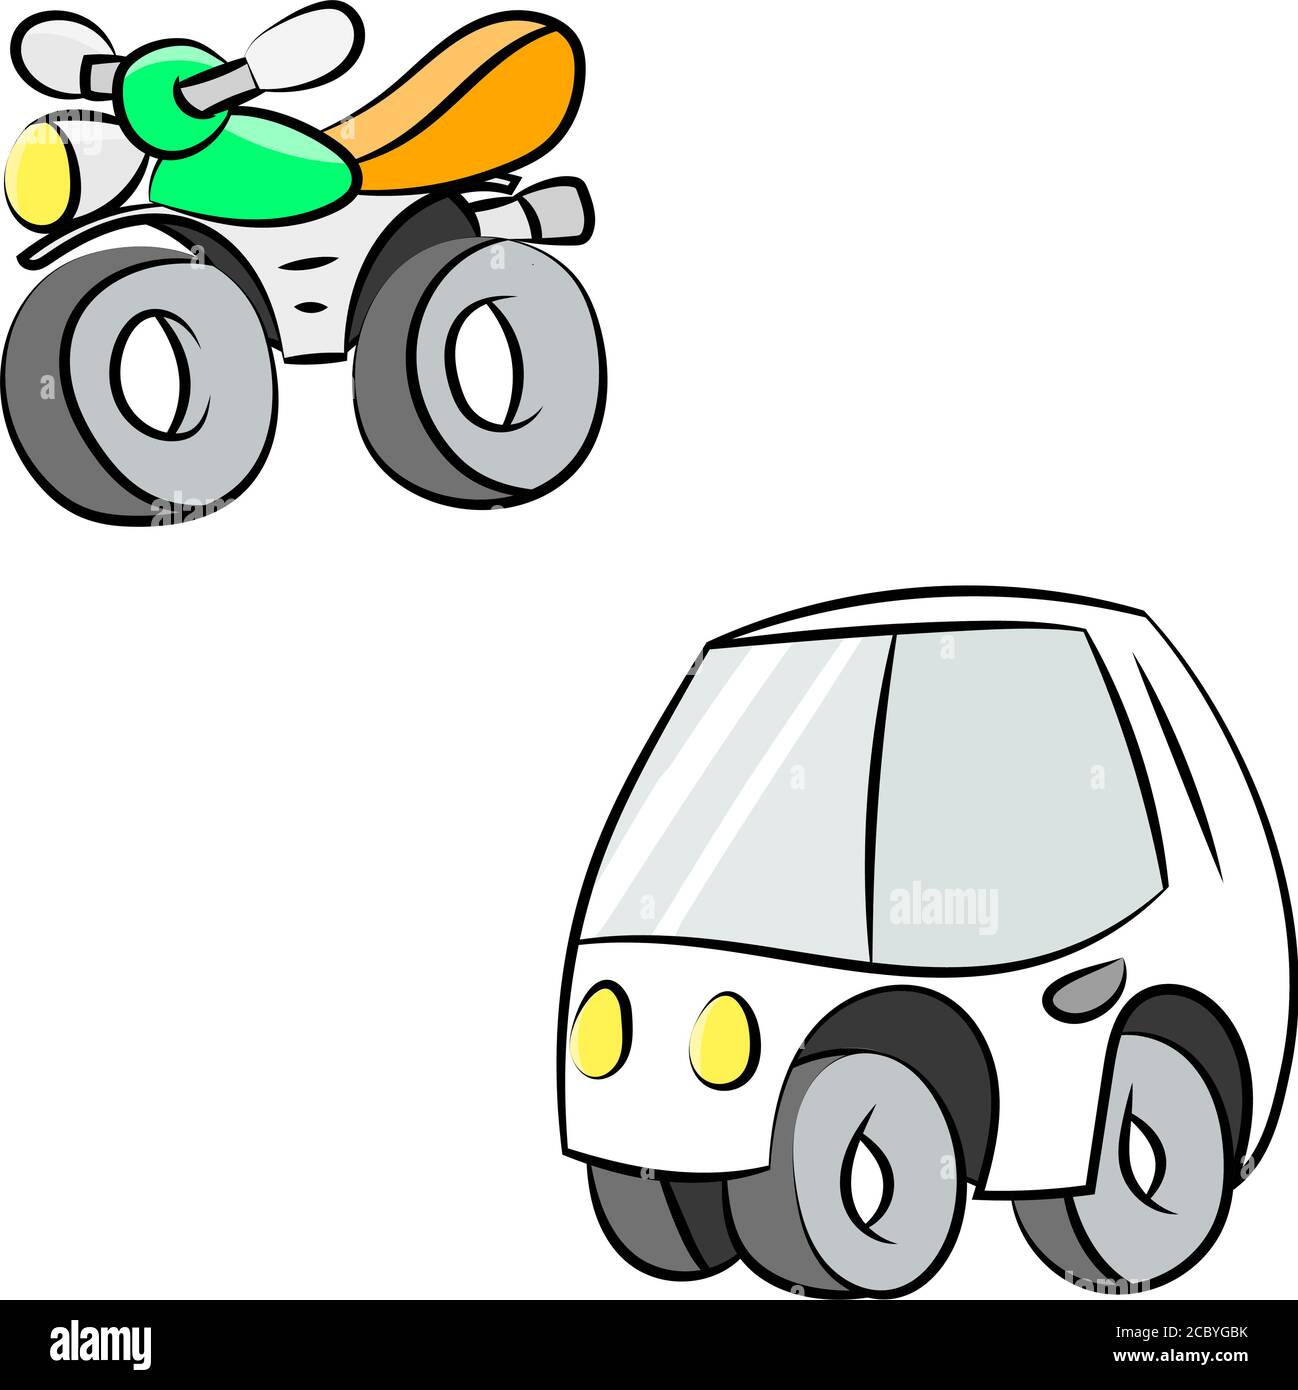 Cartoon car and motorcycle vector illustration Stock Vector